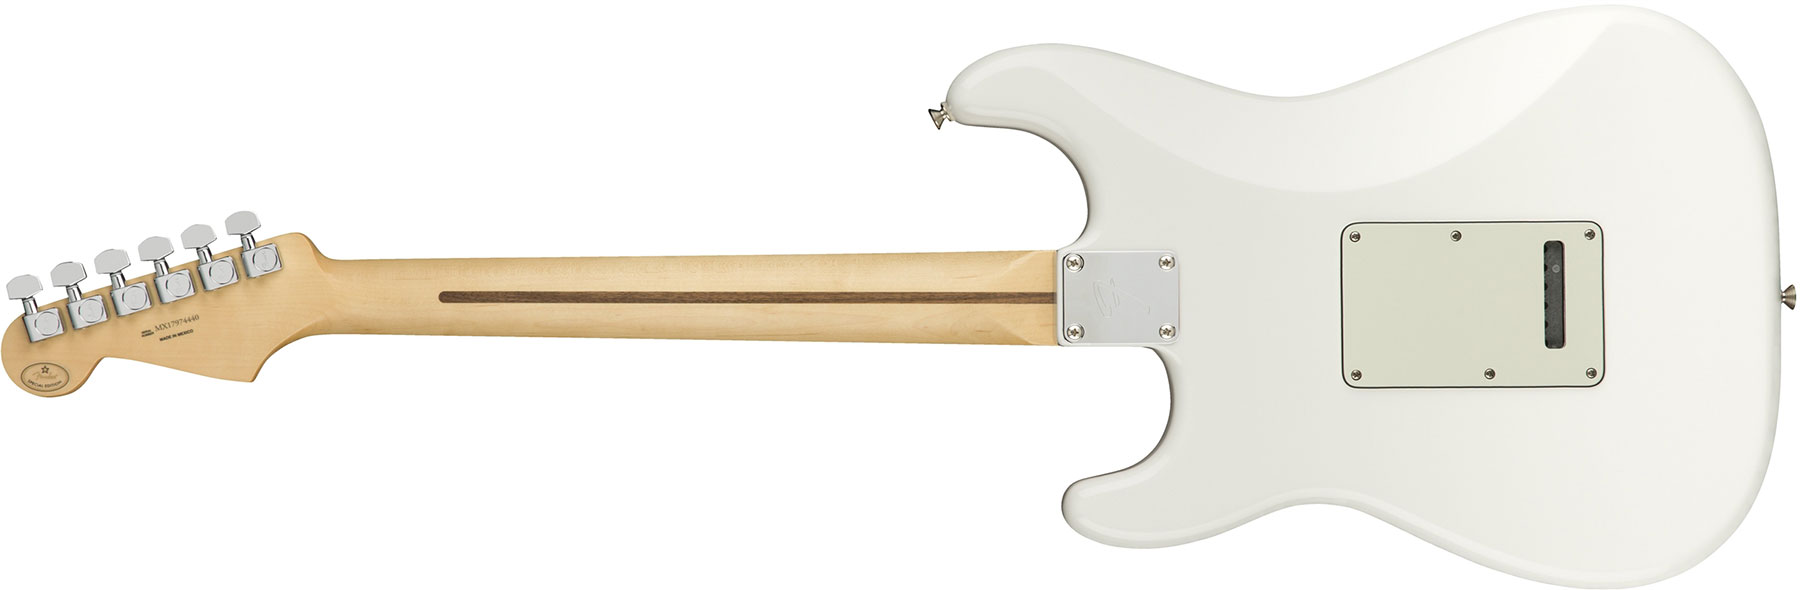 Fender Strat Player Mex Hss Pf - Polar White - Guitarra eléctrica con forma de str. - Variation 1